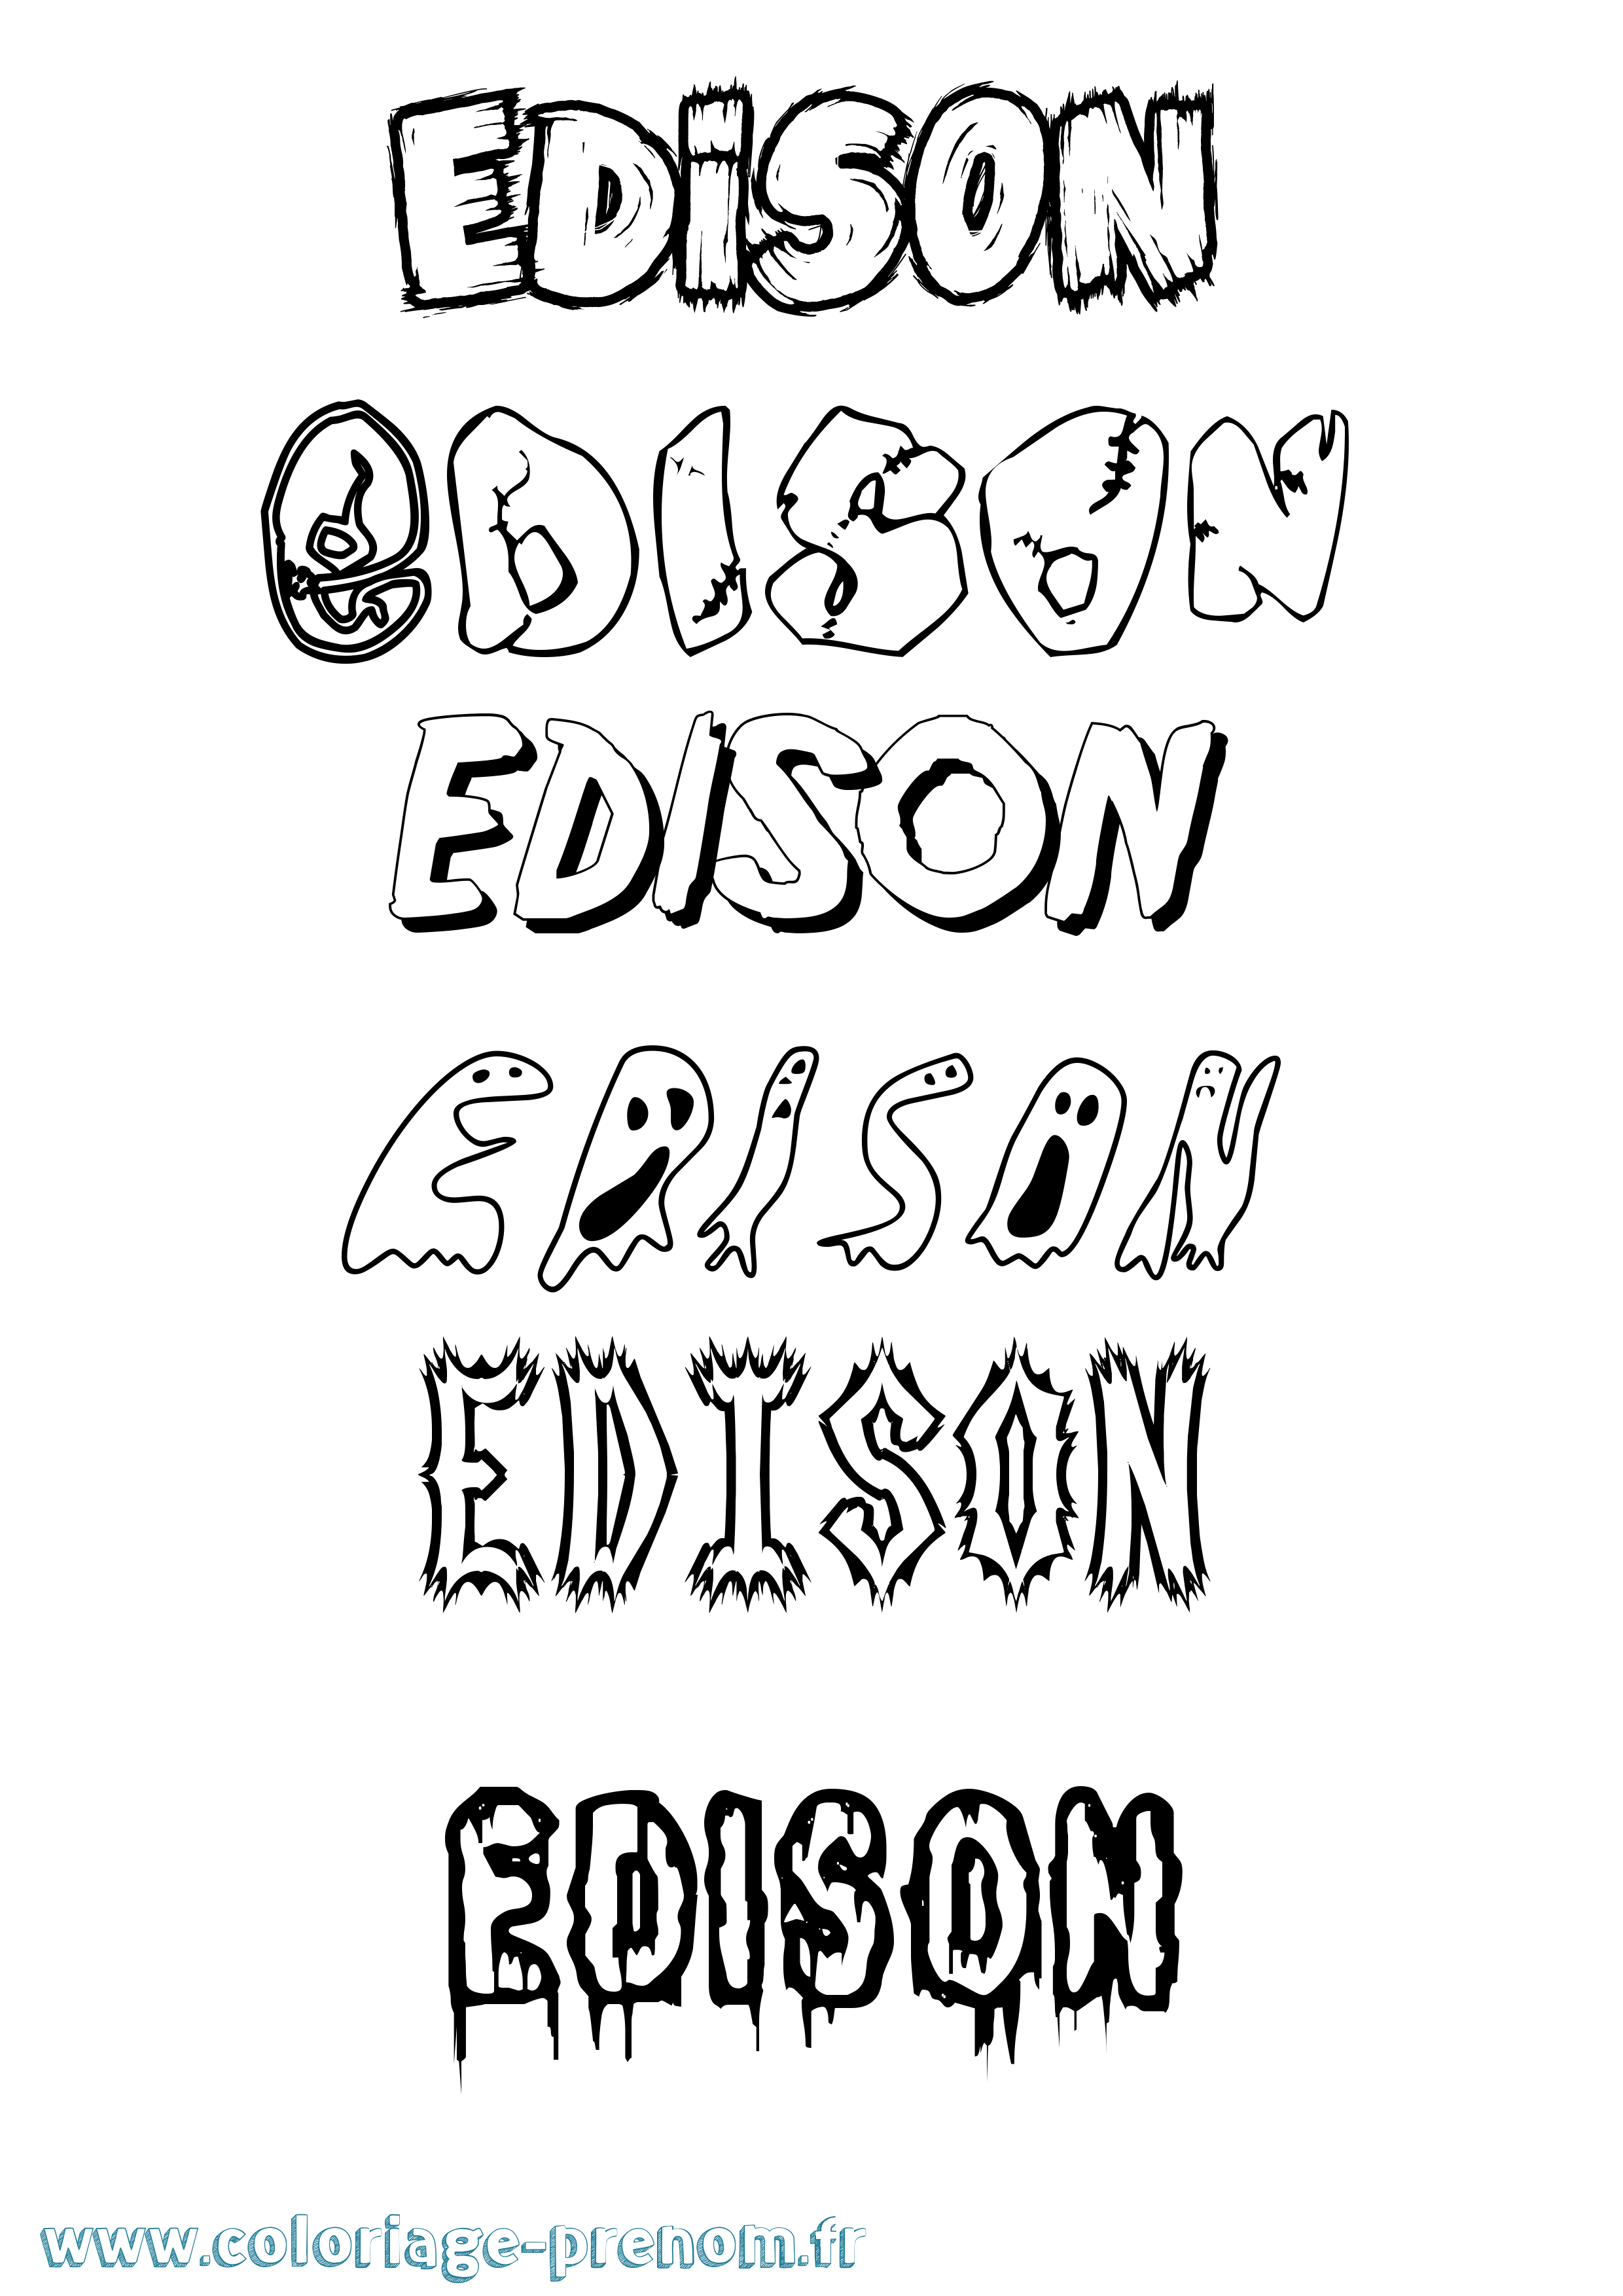 Coloriage prénom Edison Frisson